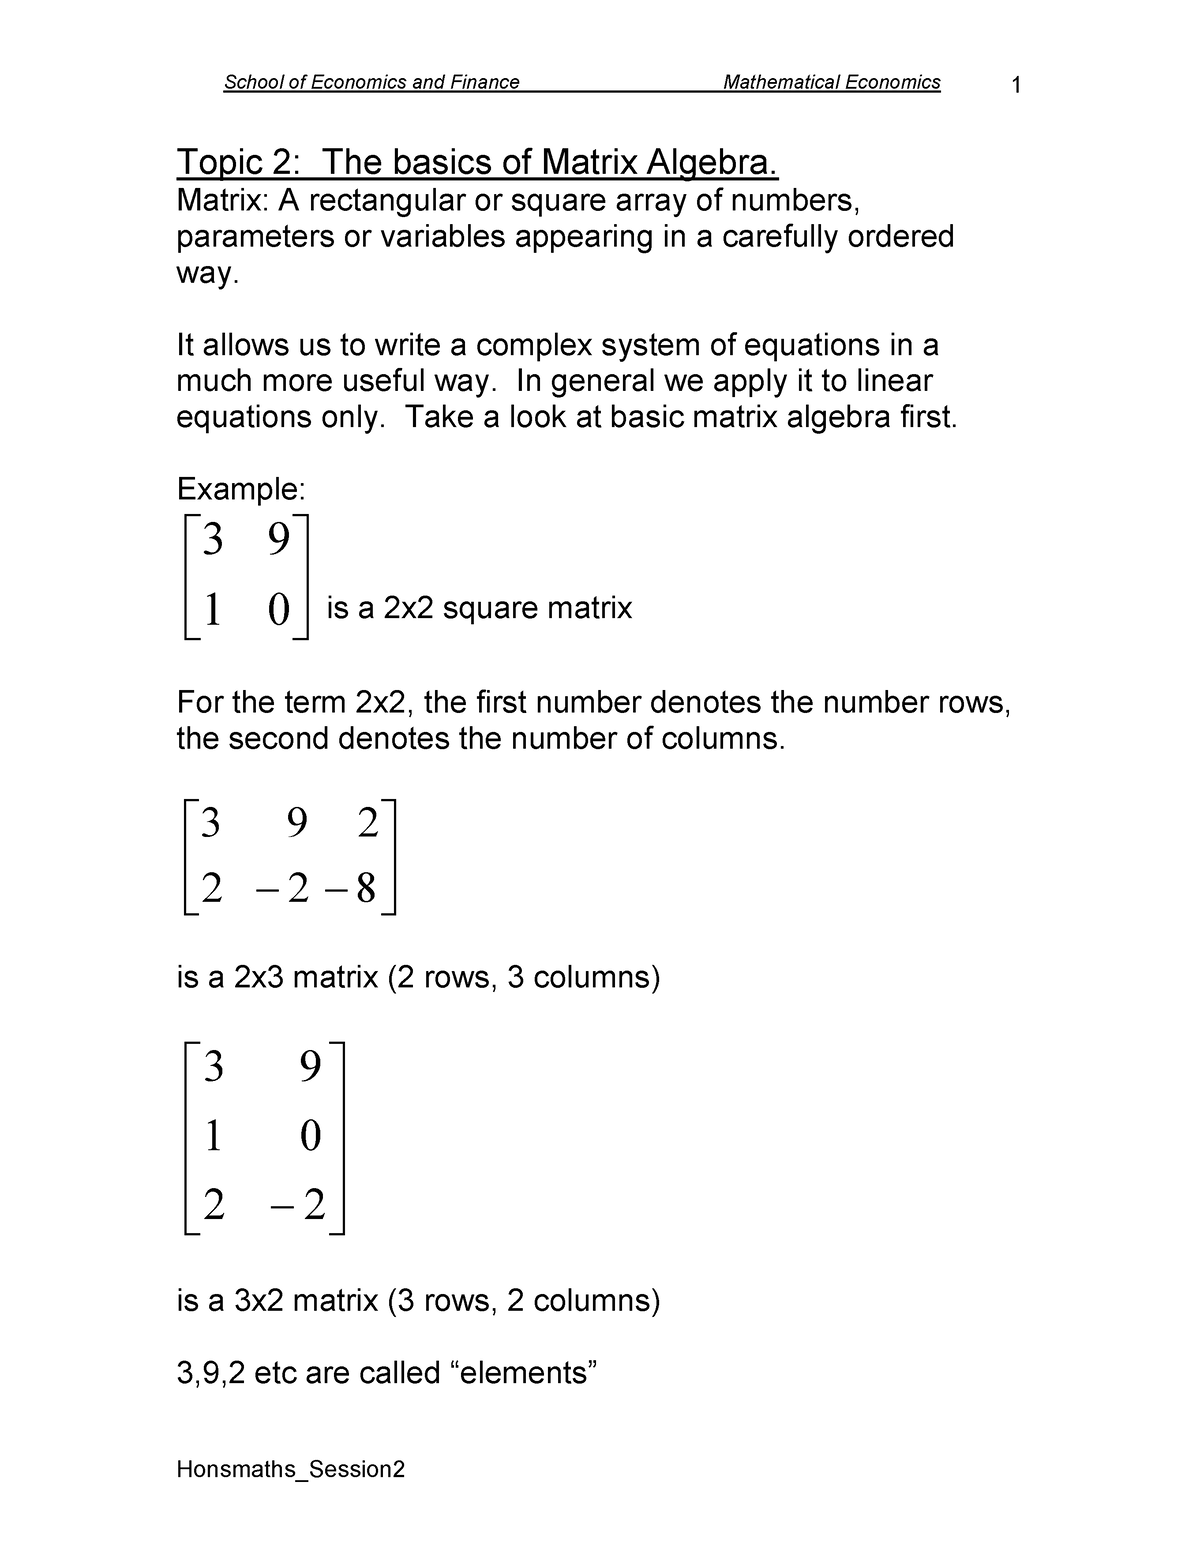 econ310-topic-2-notes-1-topic-2-the-basics-of-matrix-algebra-matrix